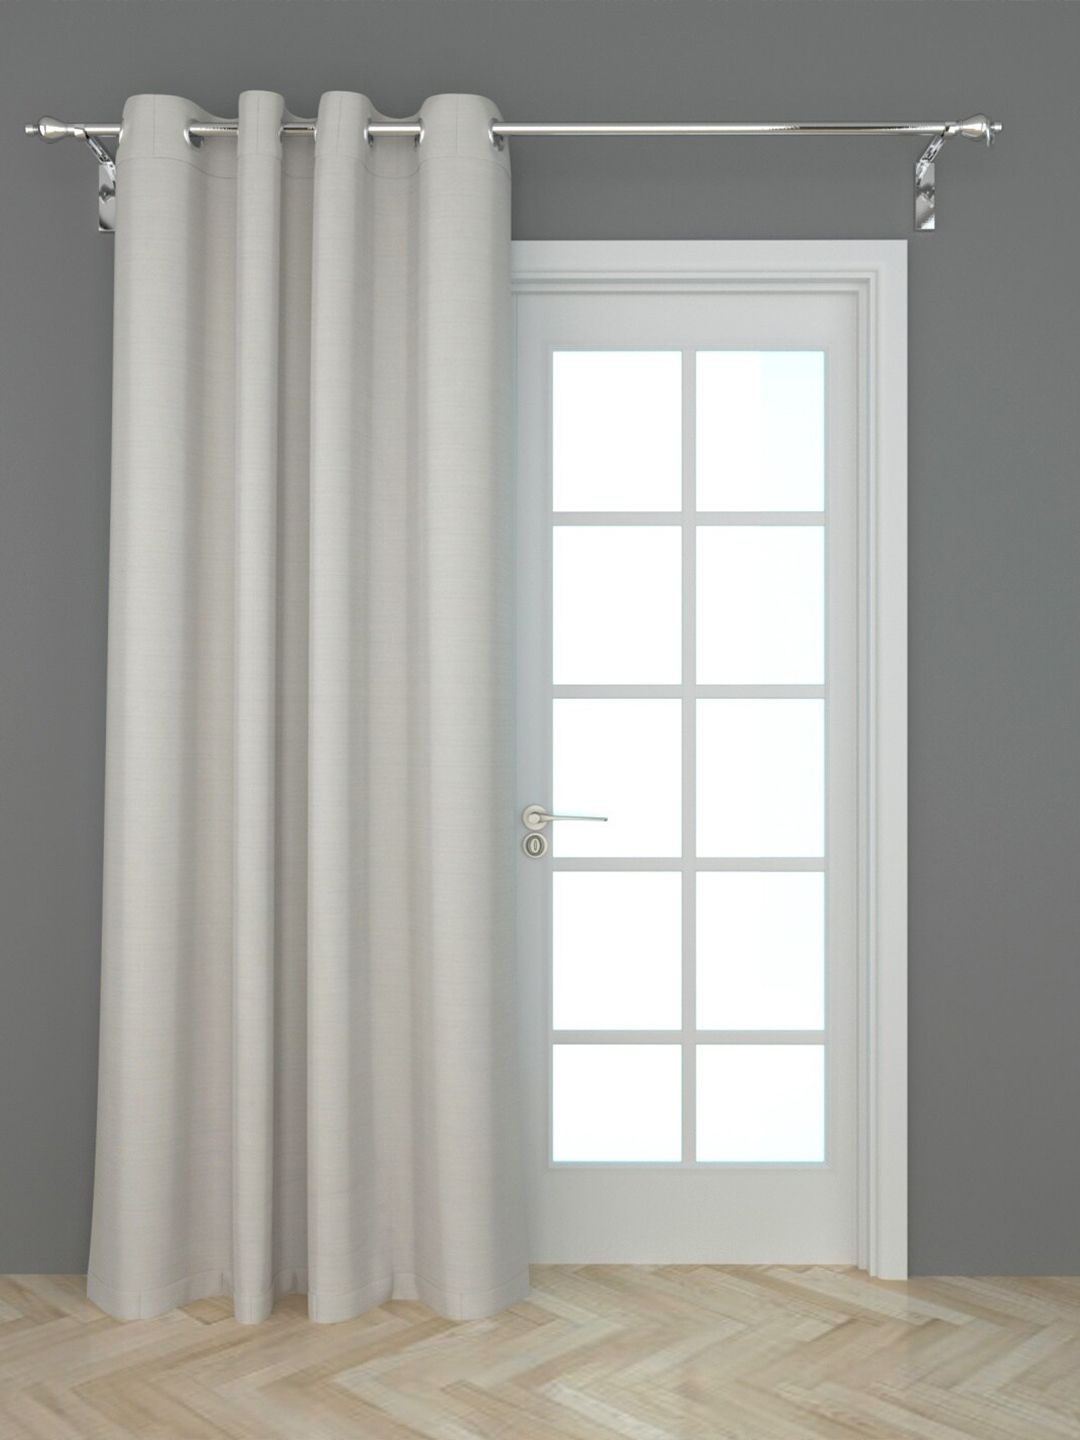 Home Centre White Door Curtain Price in India